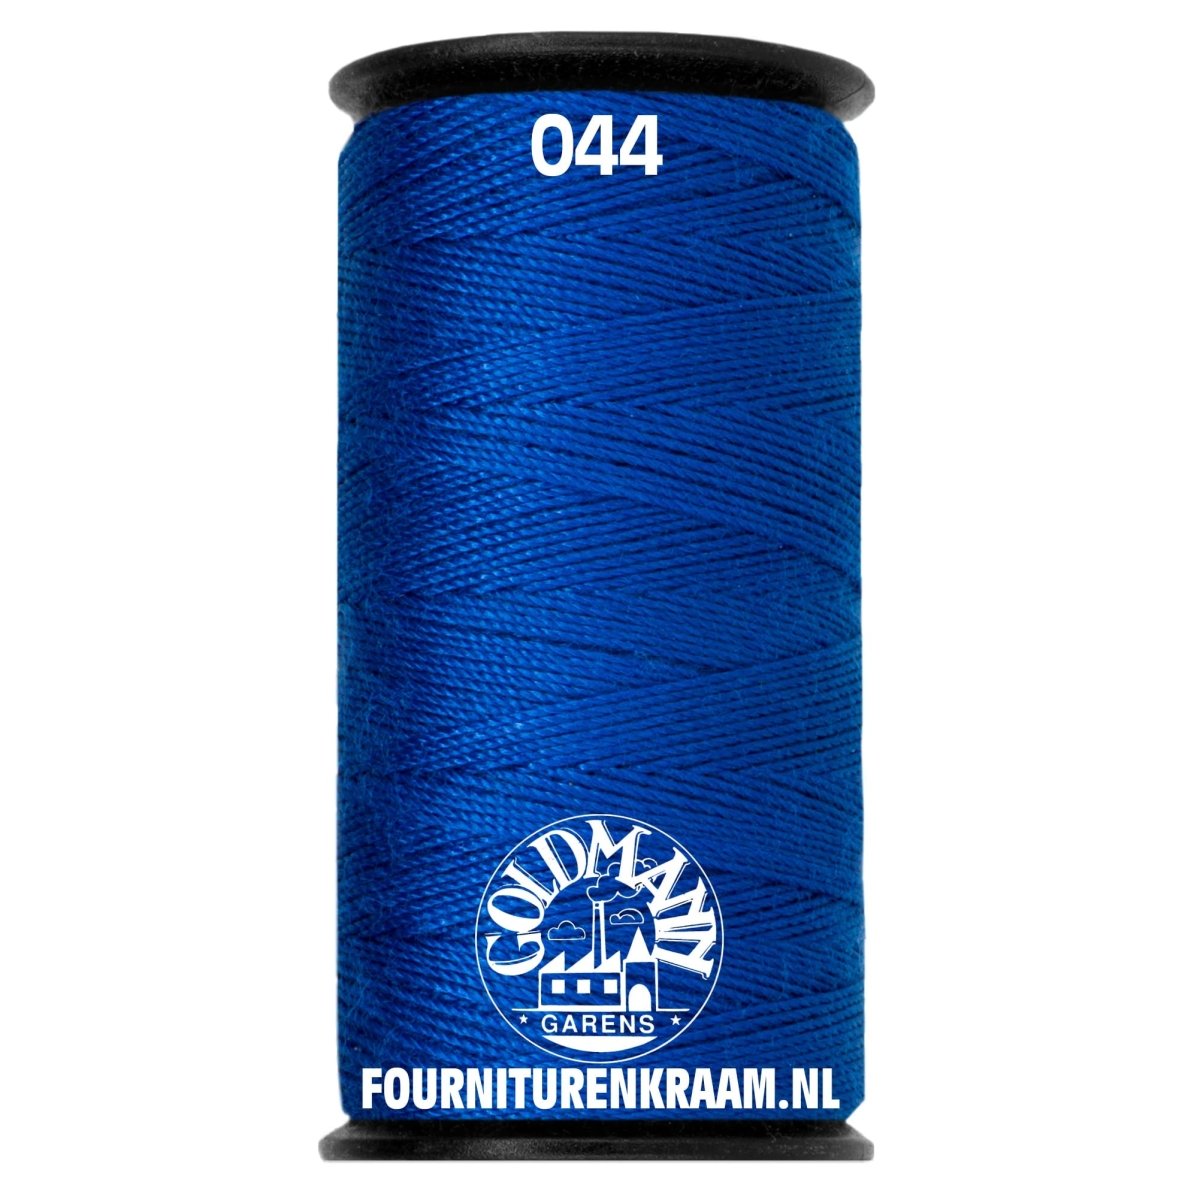 Goldmann garen extra sterk 100m - 044 kobalt blauw Garen GOLDMANN-STERK-100-044 2410044 - Fourniturenkraam.nl